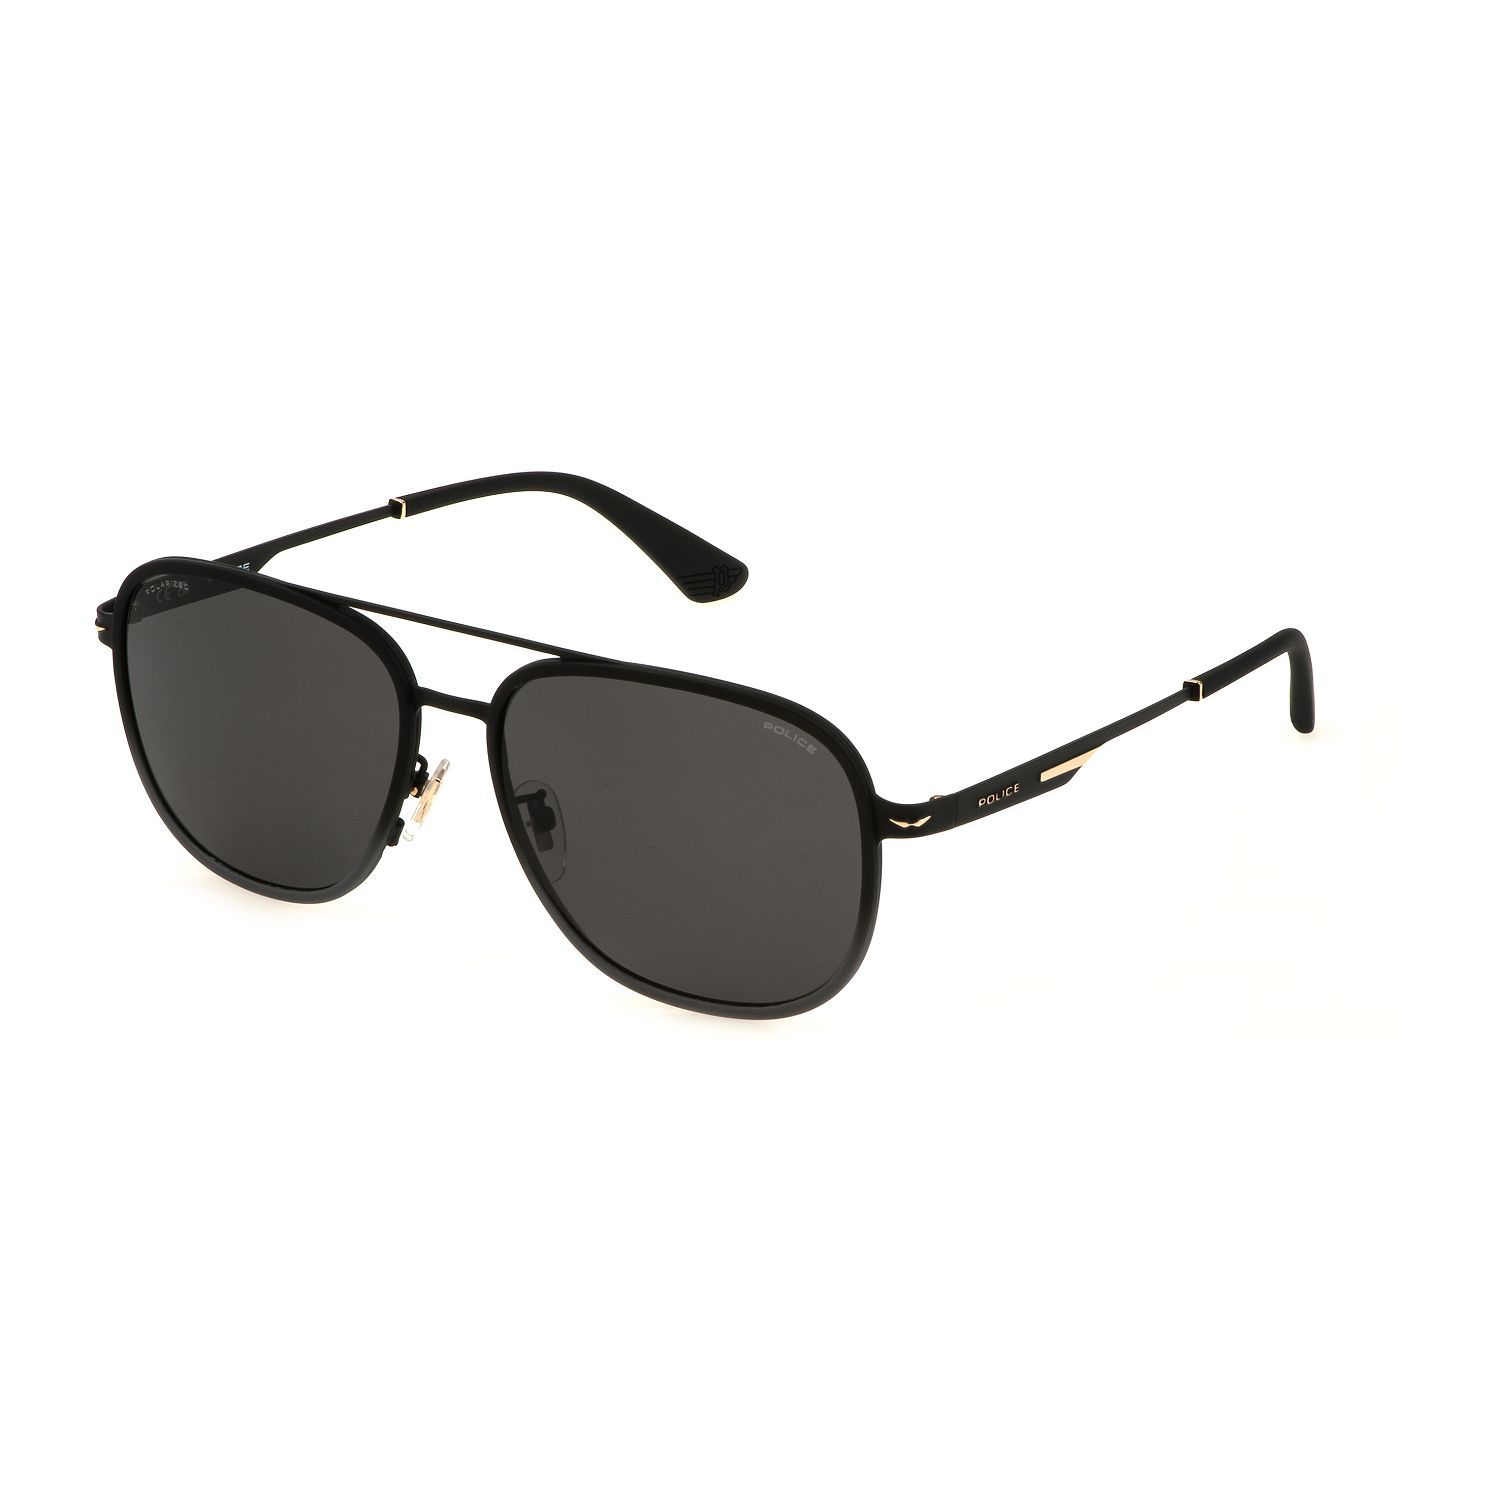 SPLL78M Square Sunglasses 305P - size 58